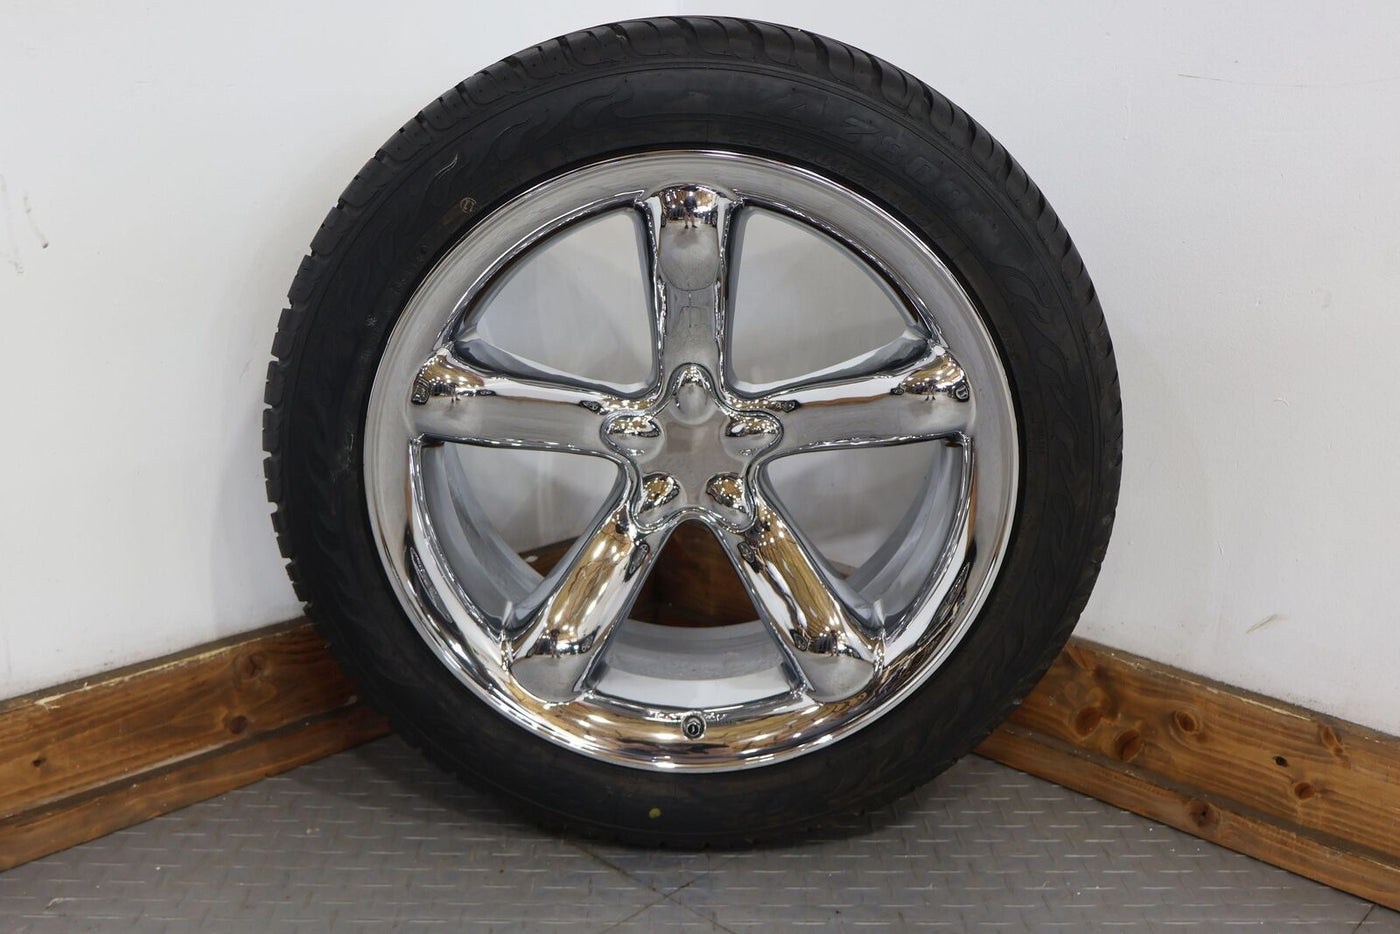 00-02 Plymouth Prowler 17" & 20" Full Wheel Set W/Tires (Chrome) W/Center Caps